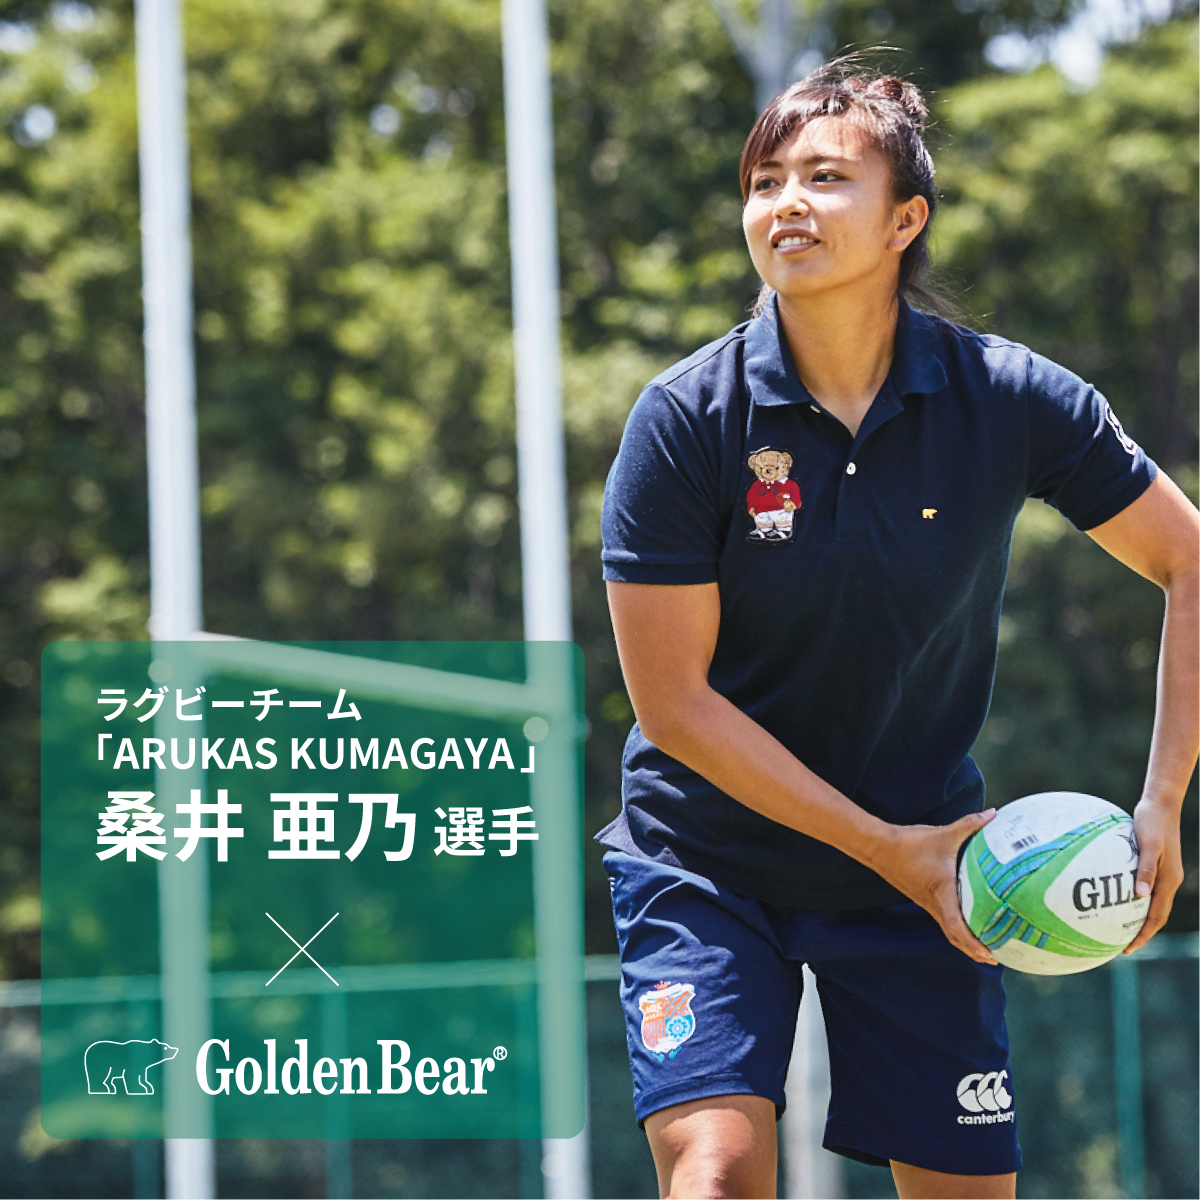 【Golden Bear】ラグビー選手 桑井 亜乃さんとコラボレーションオリジナルポロシャツを限定発売